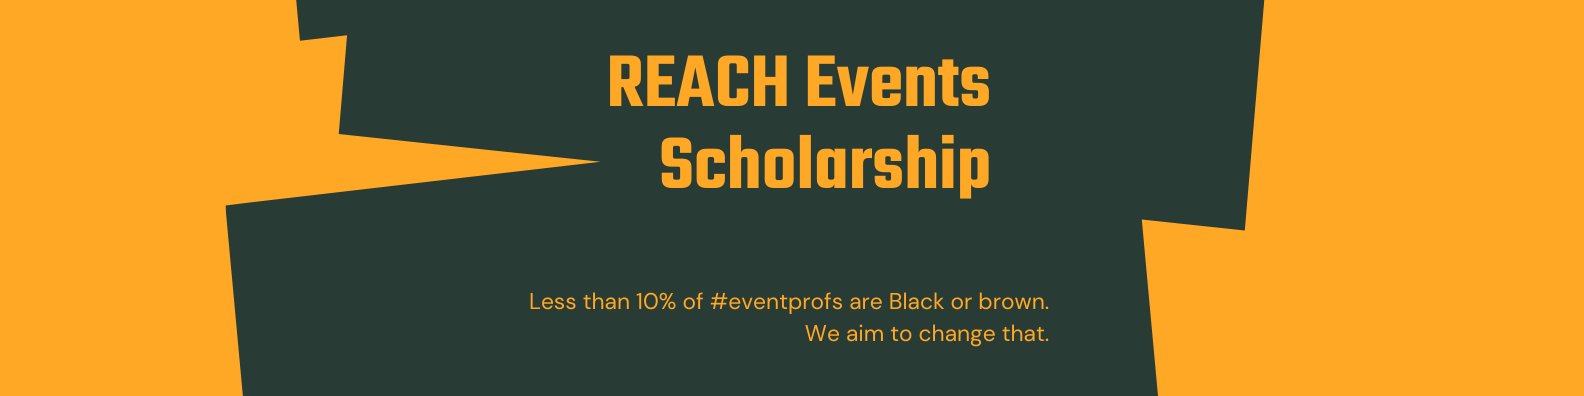 REACH Events Scholarship